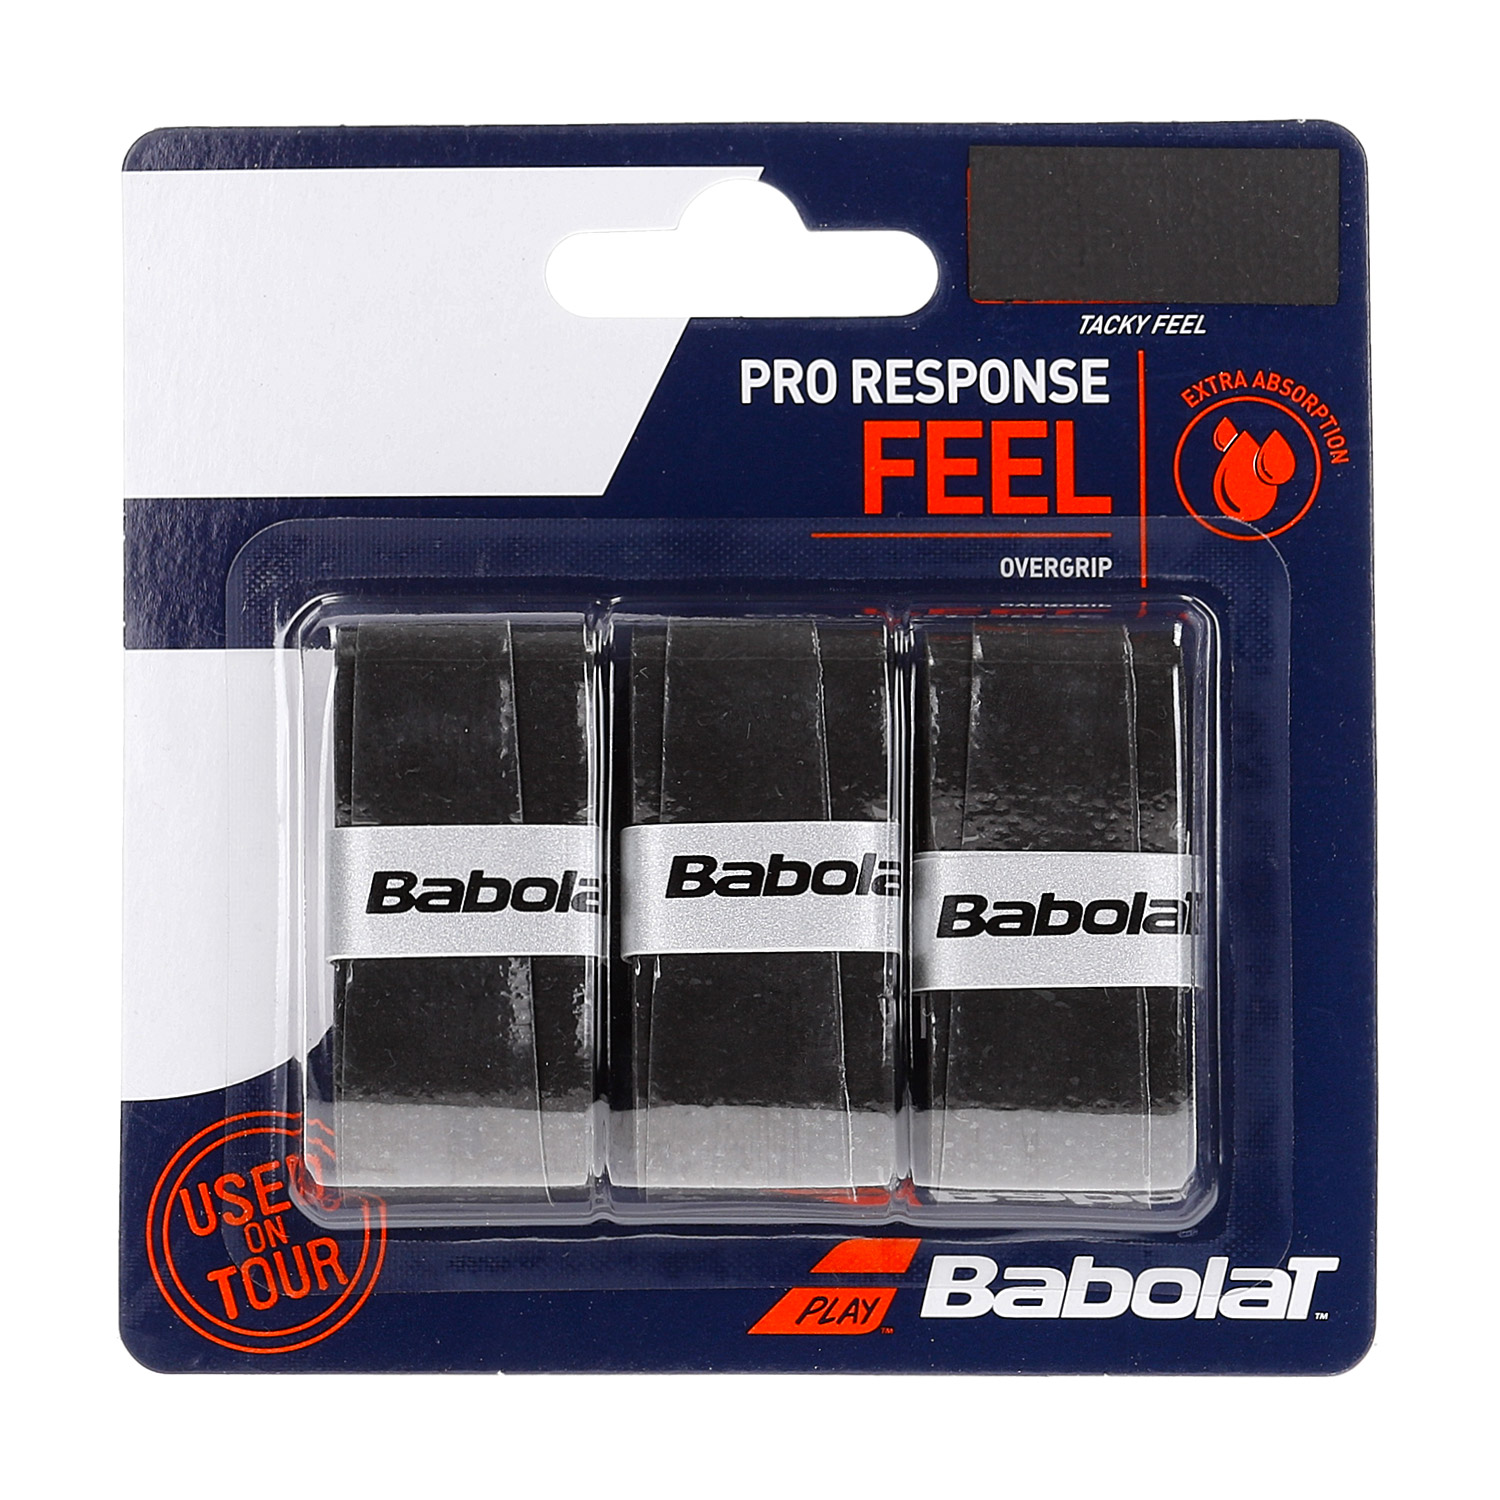 Babolat Pro Response Overgrip x 3 - Black